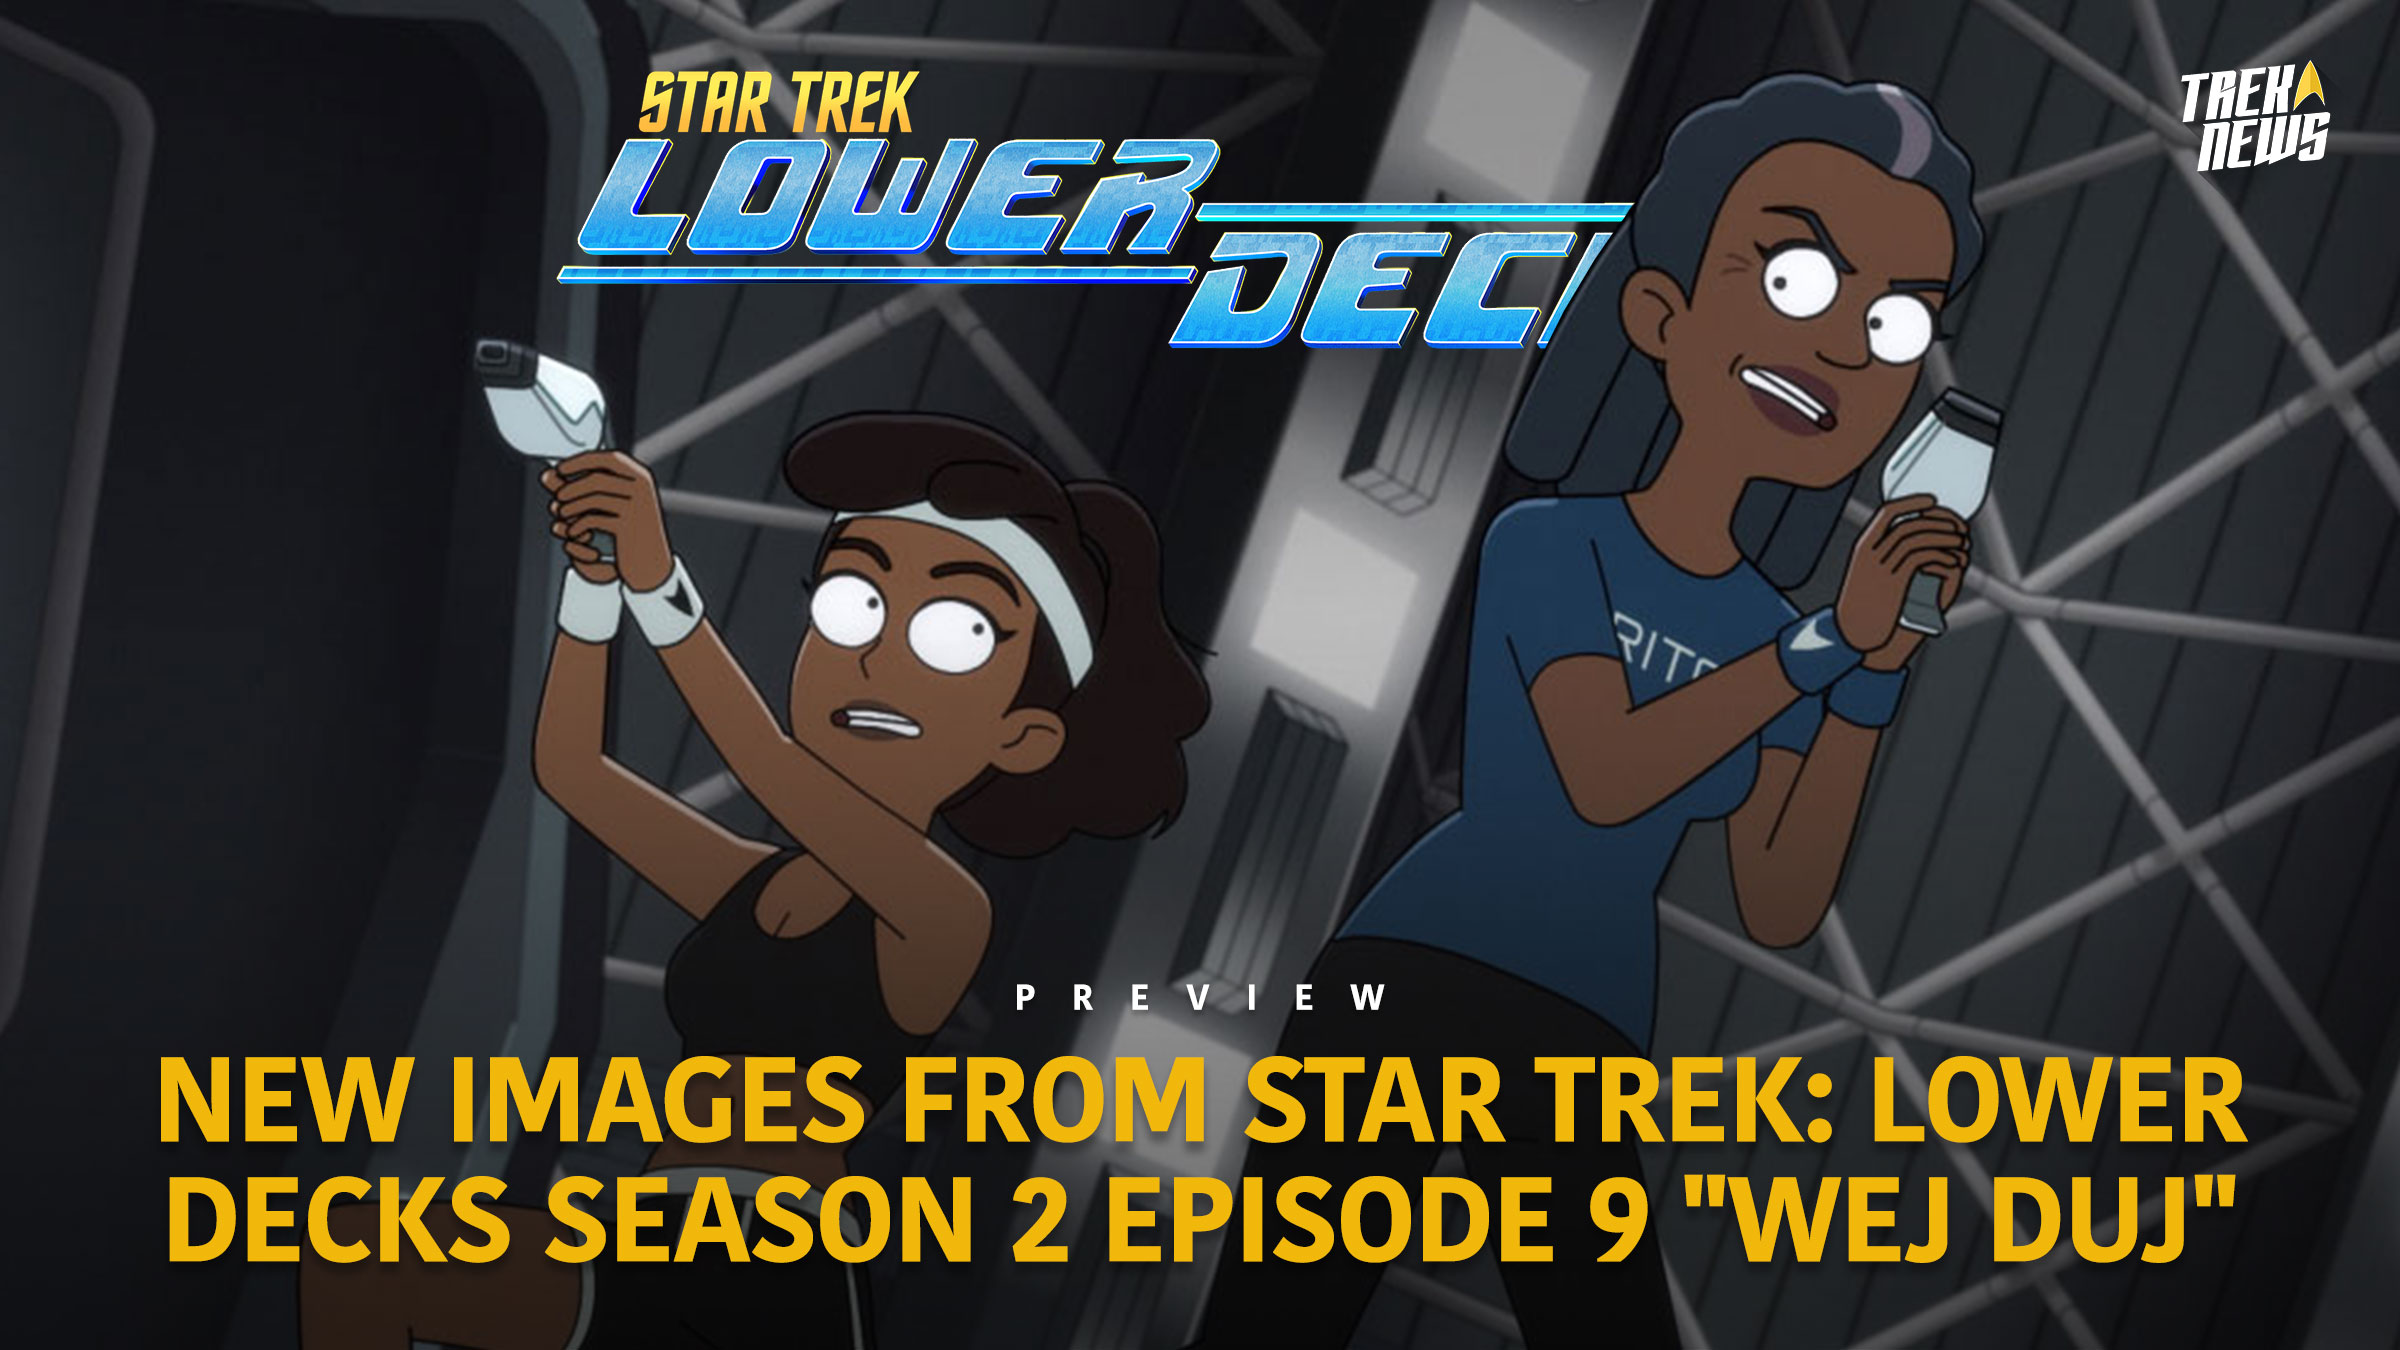 New Images From Star Trek: Lower Decks Season 2 Episode 9 “Wej Duj”